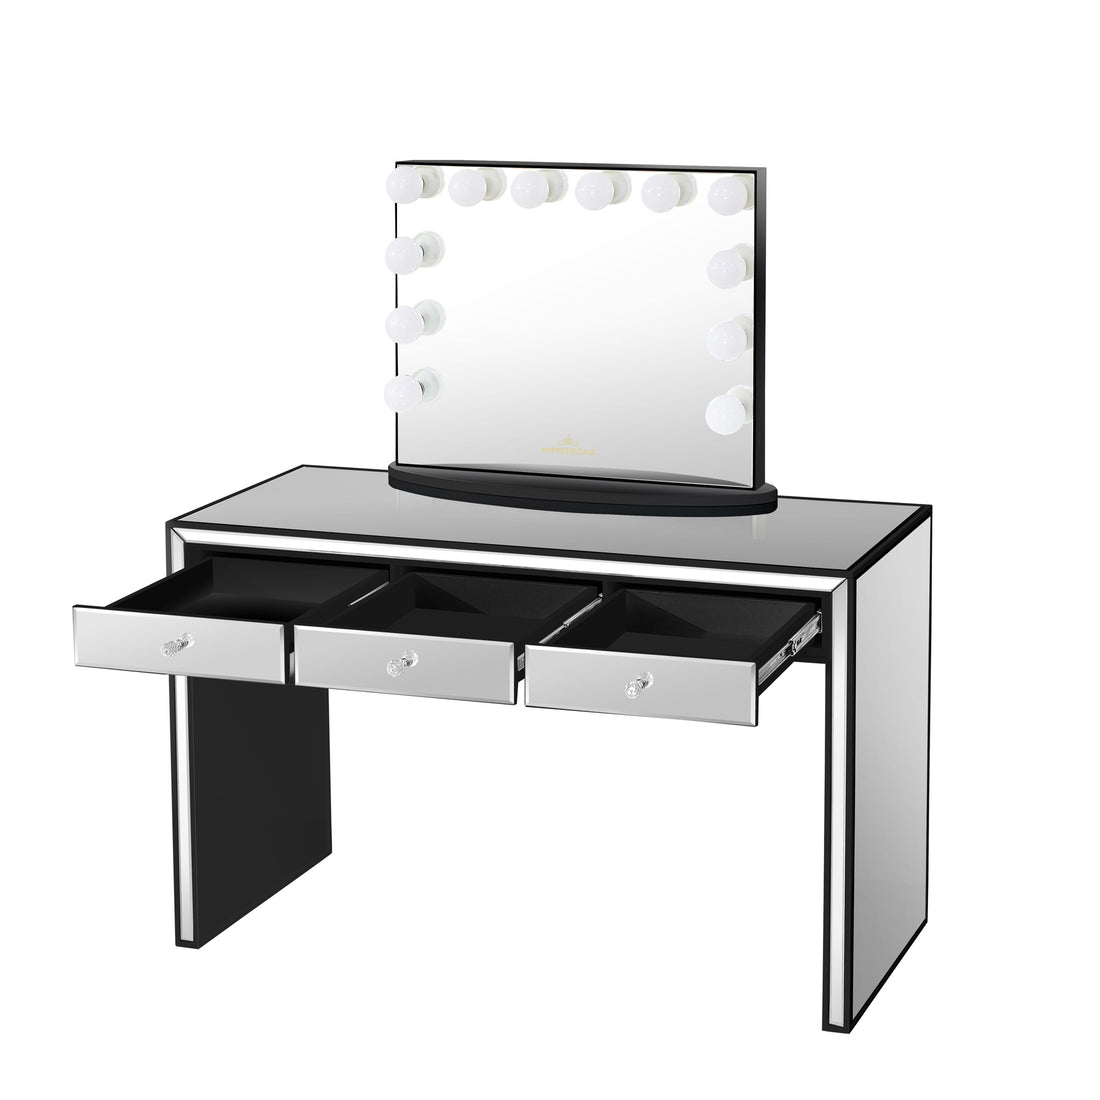 Leah Premium Mirrored Vanity Table Impressions Vanity Co